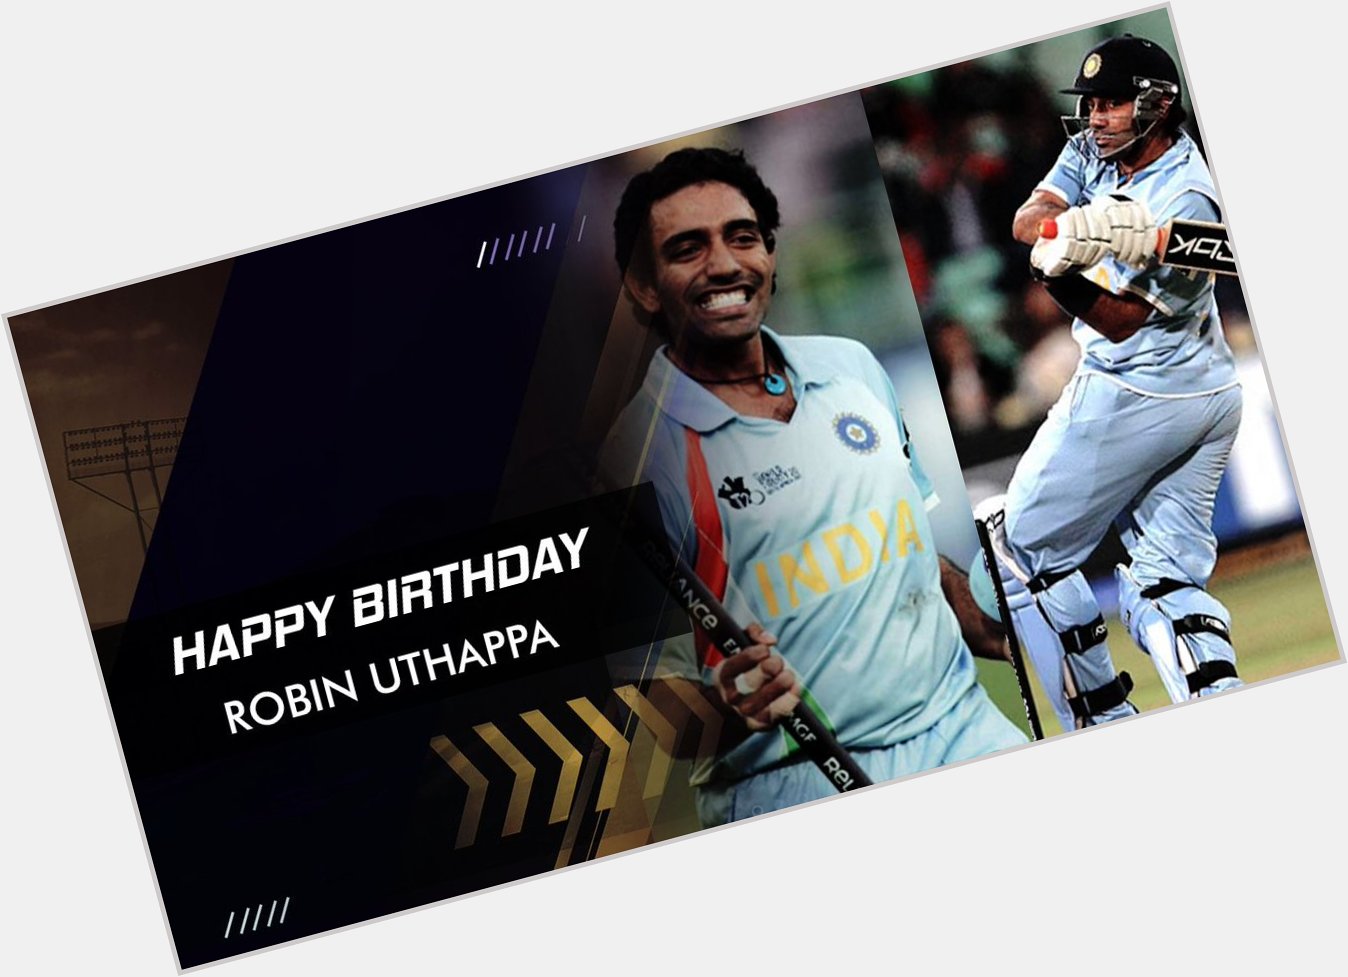 Happy Birthday!! Robin Uthappa

2007 World T20-winner 